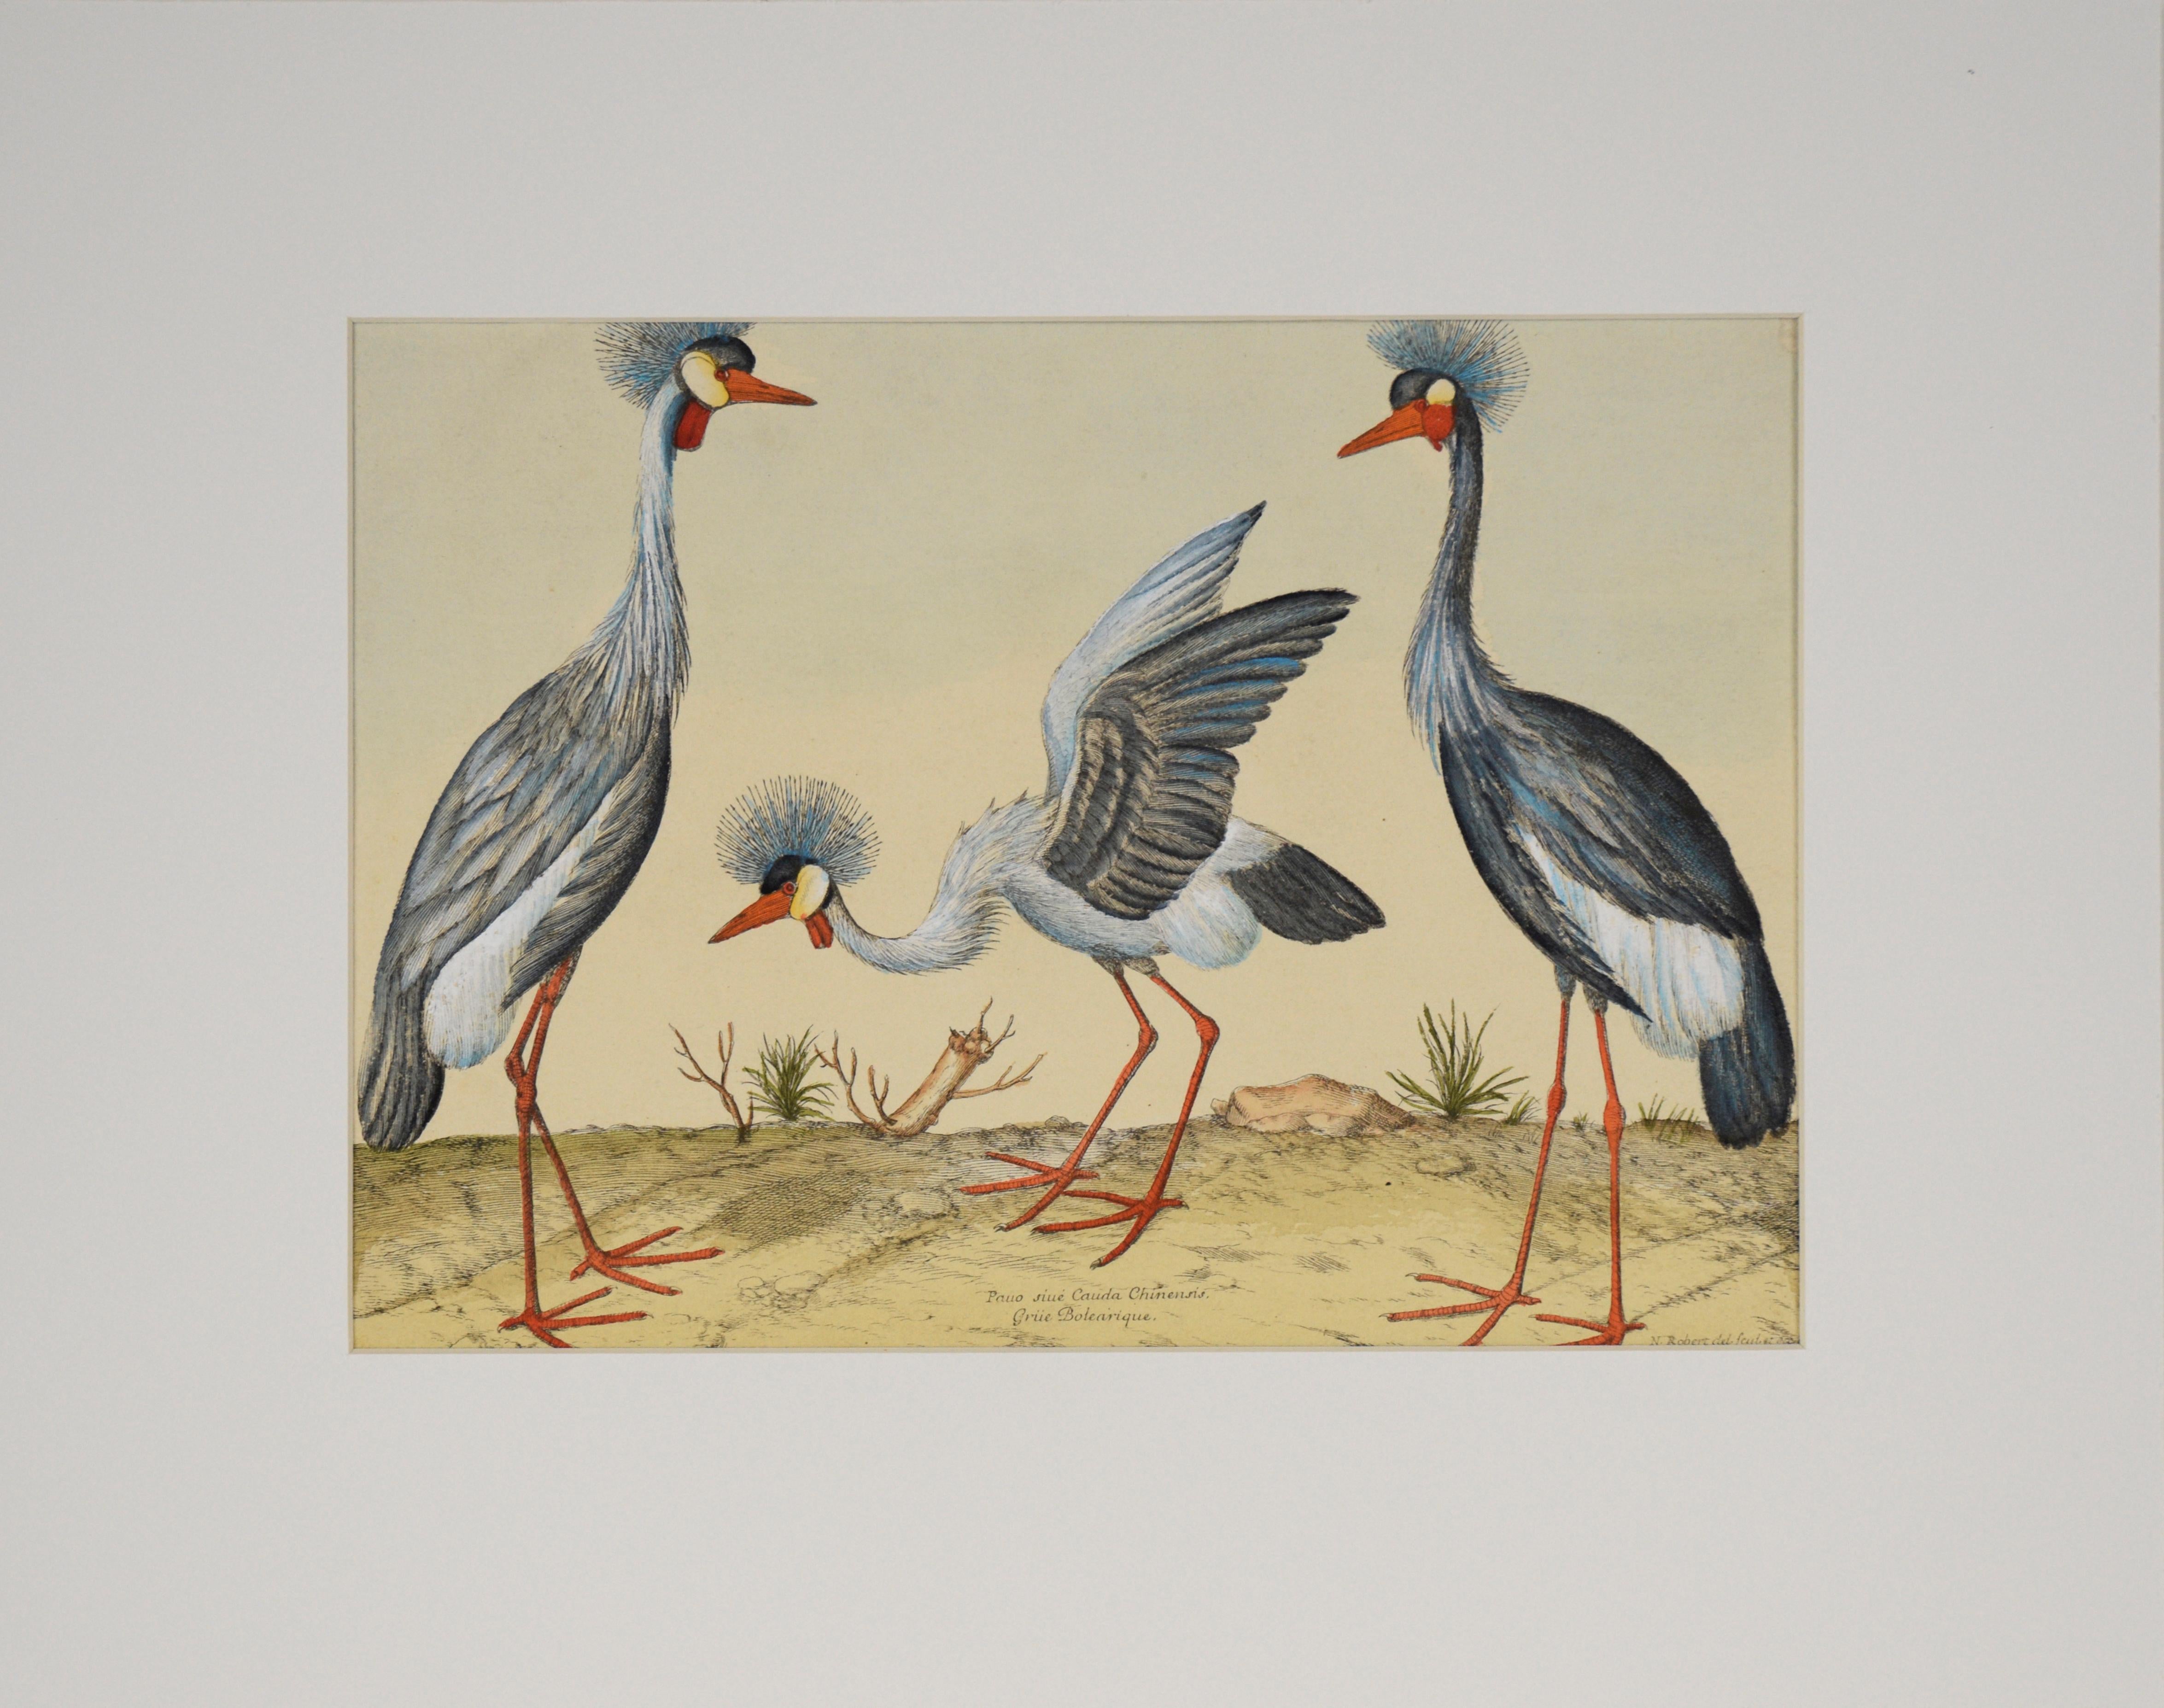 "Three Herons" - Hand Watercolor Engraving